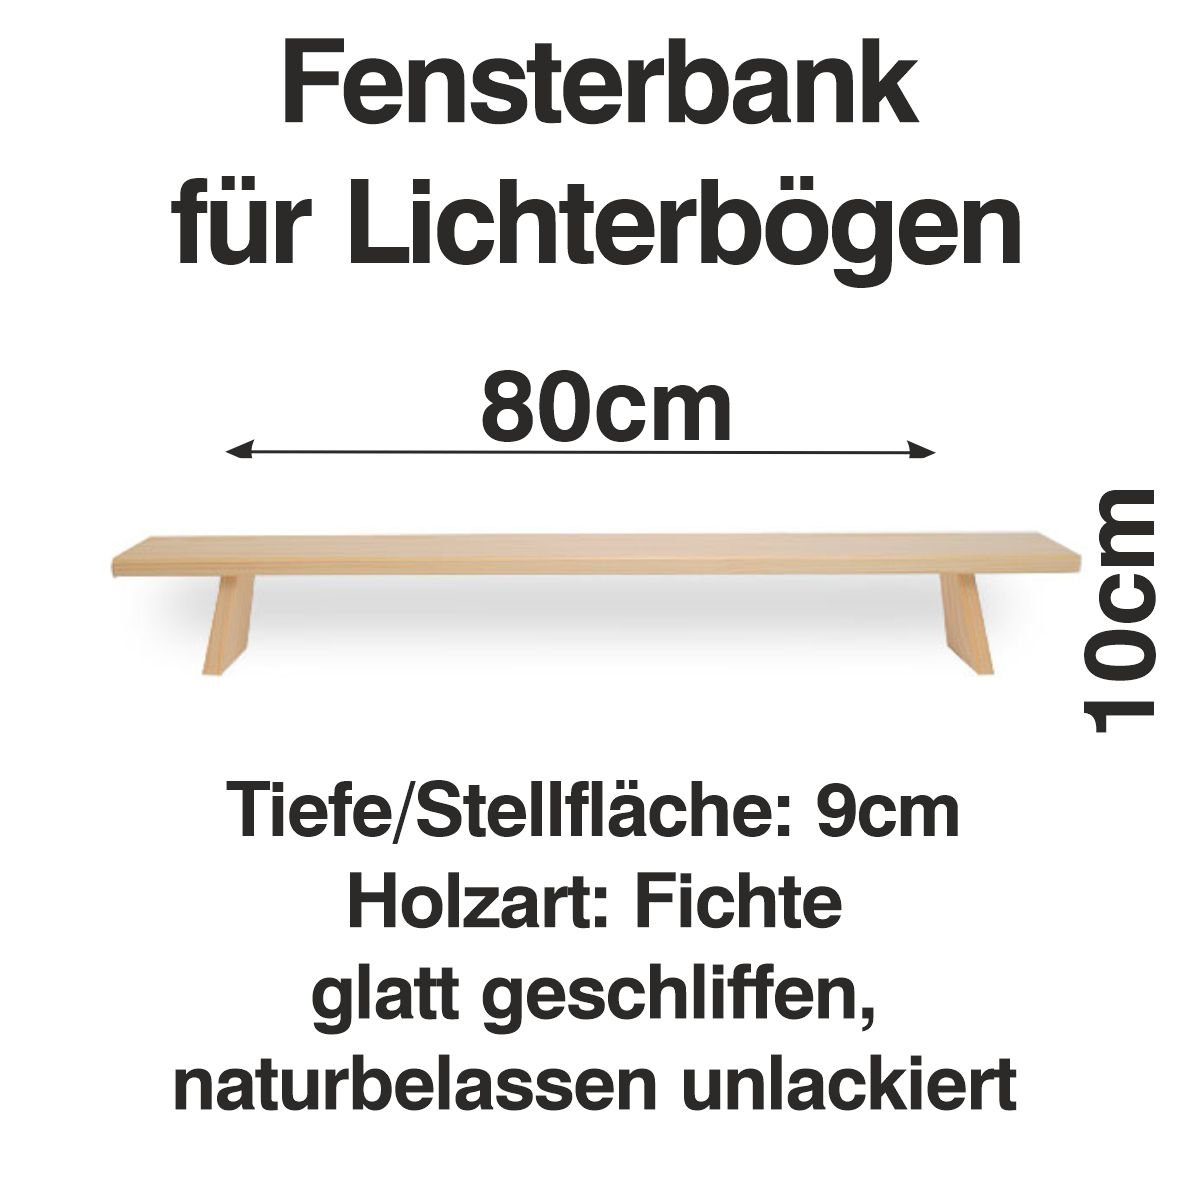 Schenk Holzkunst Fenst 80 Erhöhung cm Bank Schwibbogen Lichterbogen Schwibbogen-Fensterbank